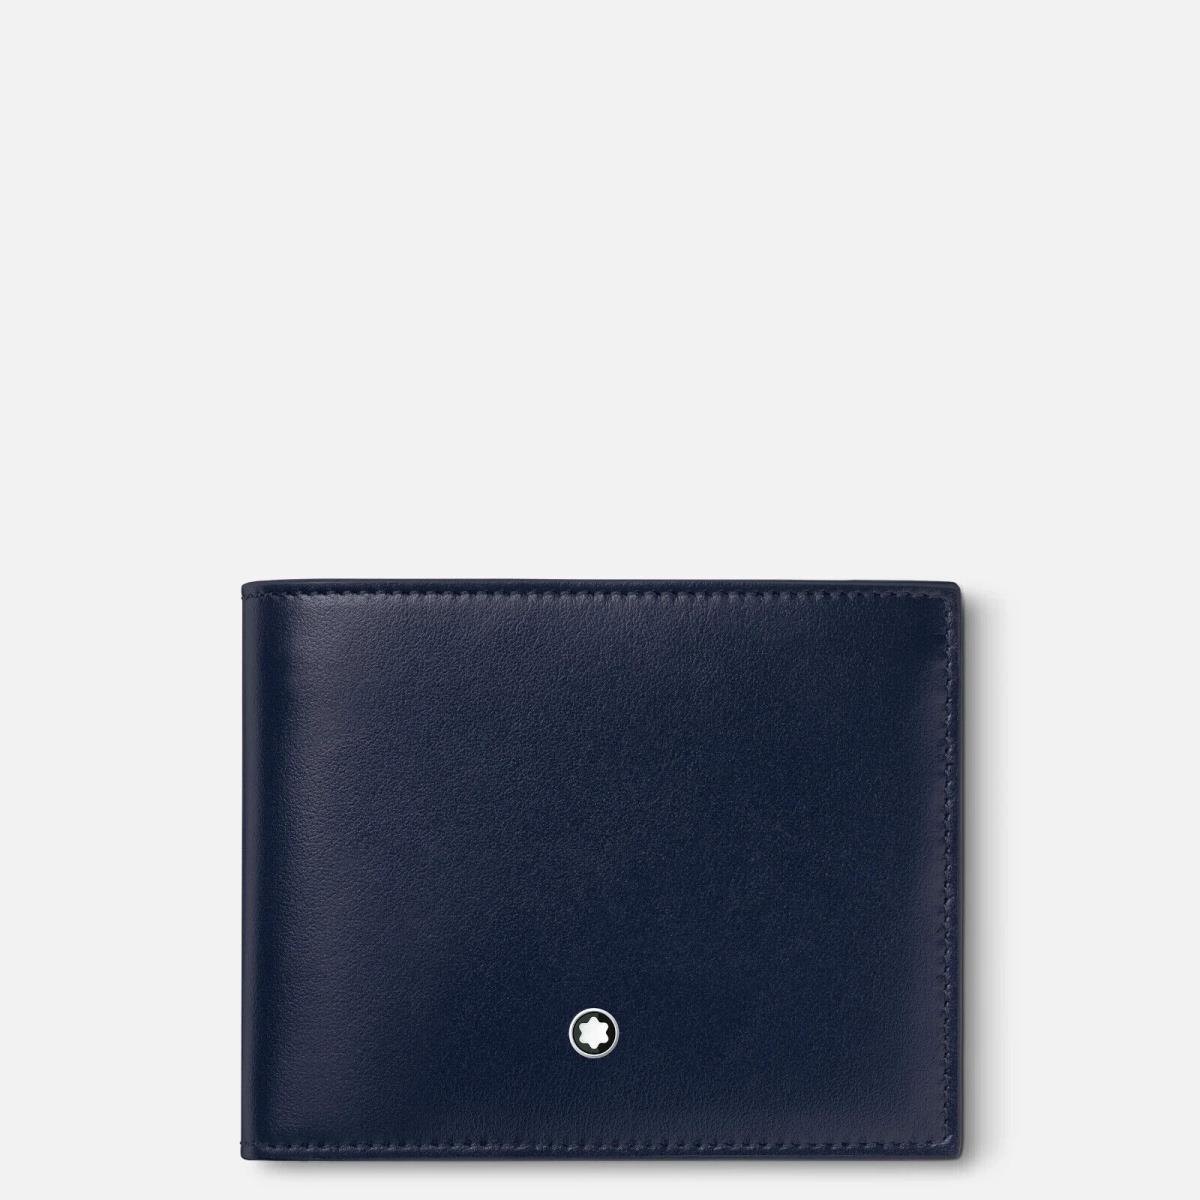 Montblanc Meisterst ck Leather Wallet 6cc 131692 Nib/paperwork